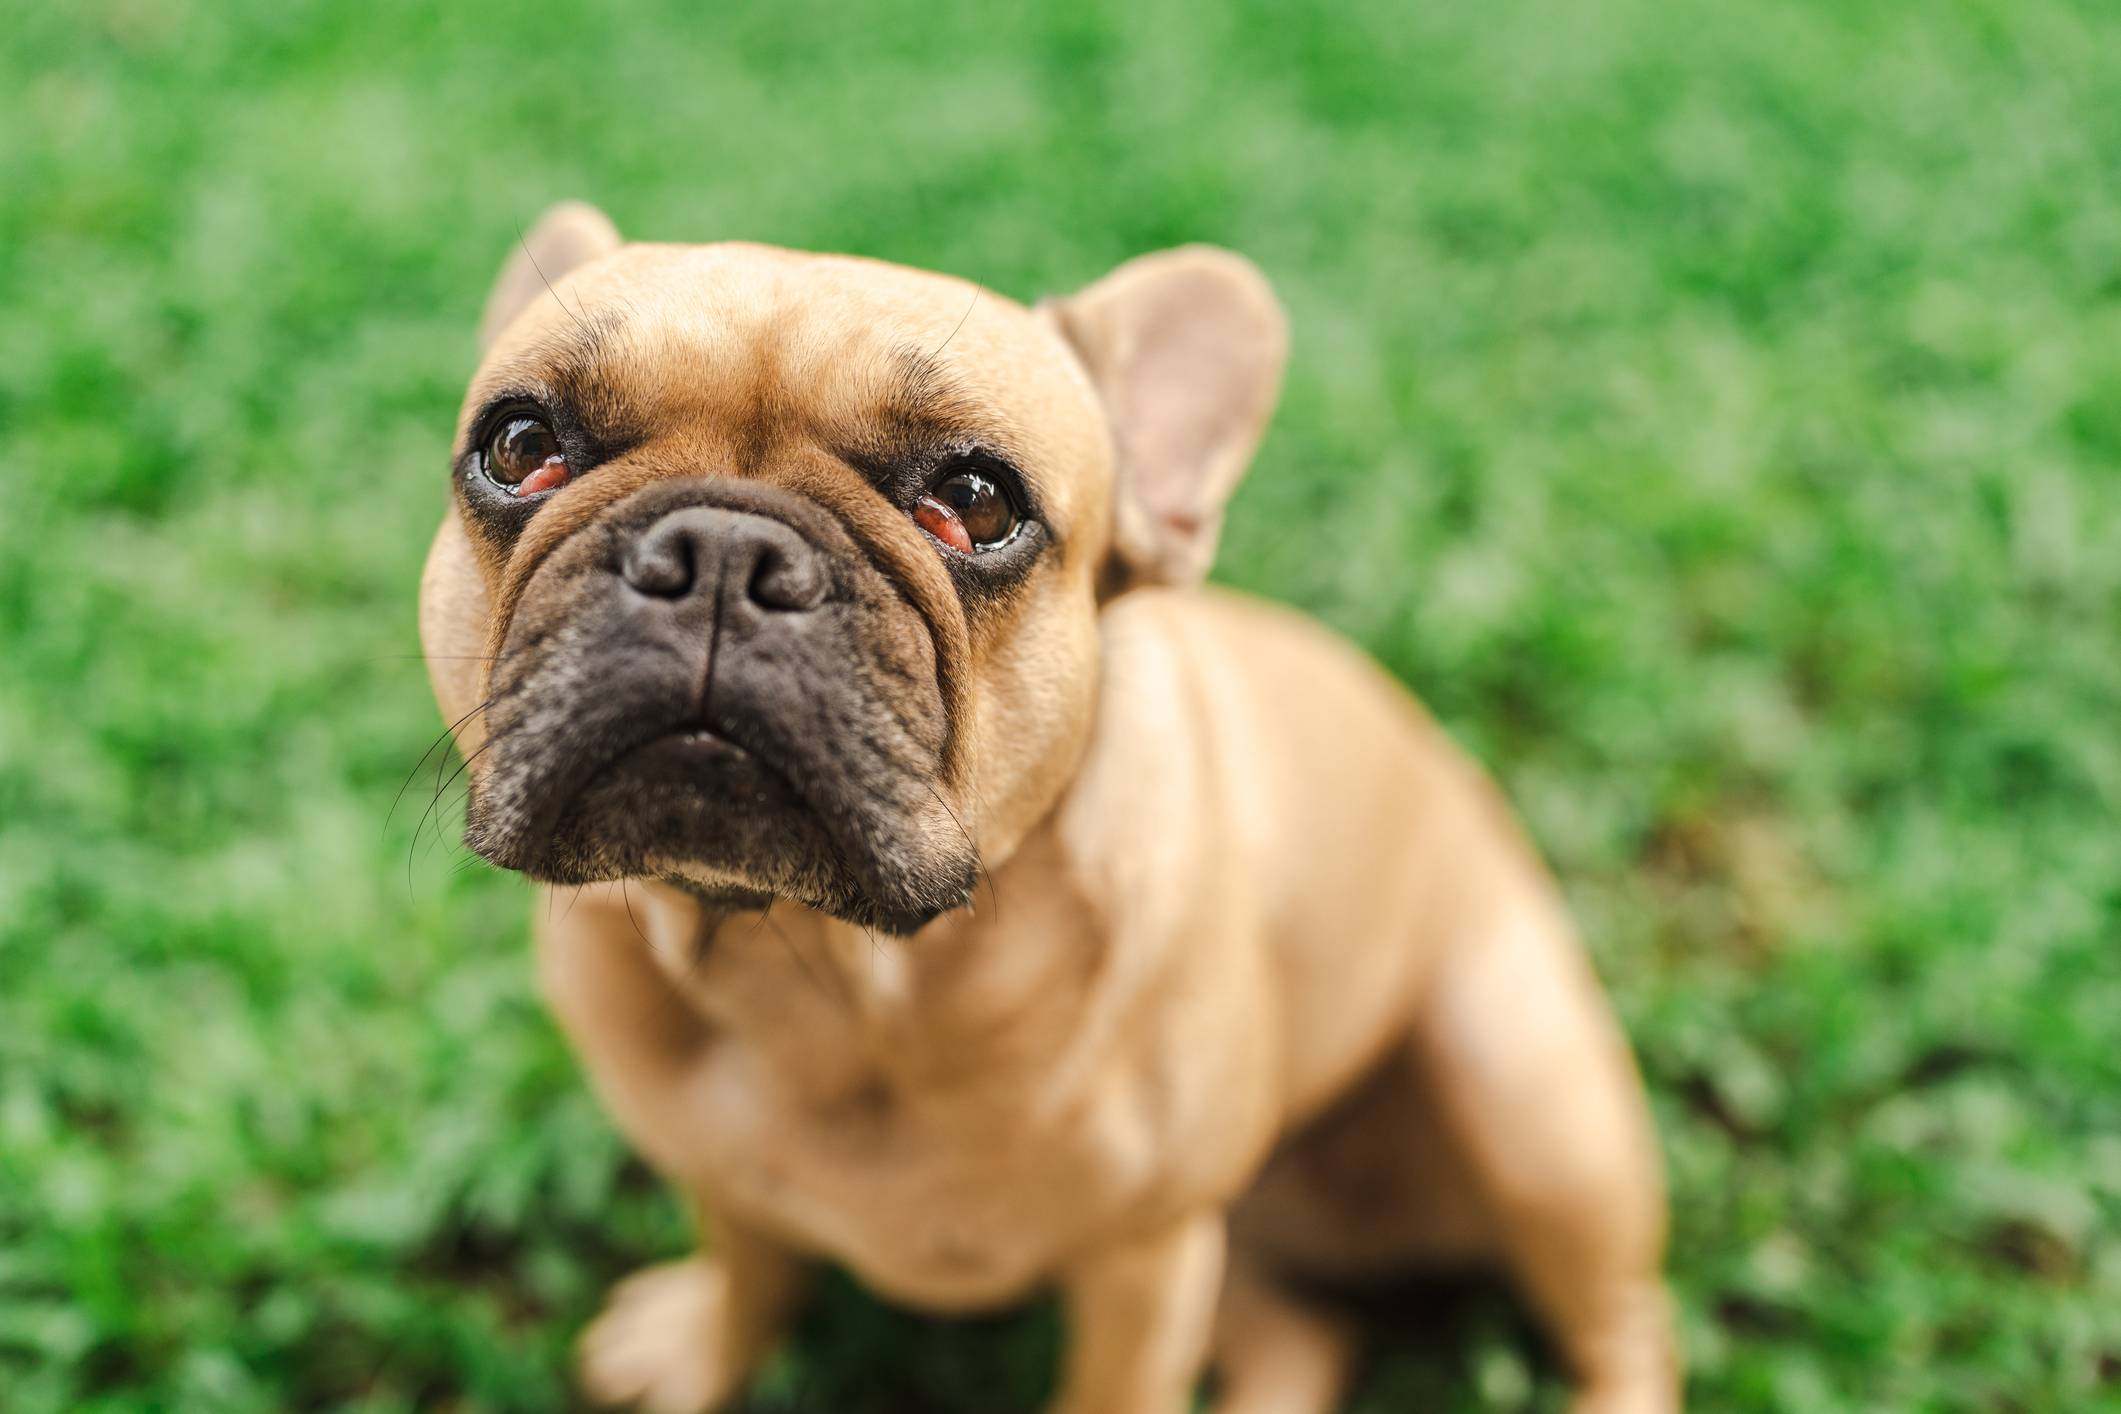 French Bulldog with bilateral prolapsed third eyelid tear glands or cherry eye in both eyes